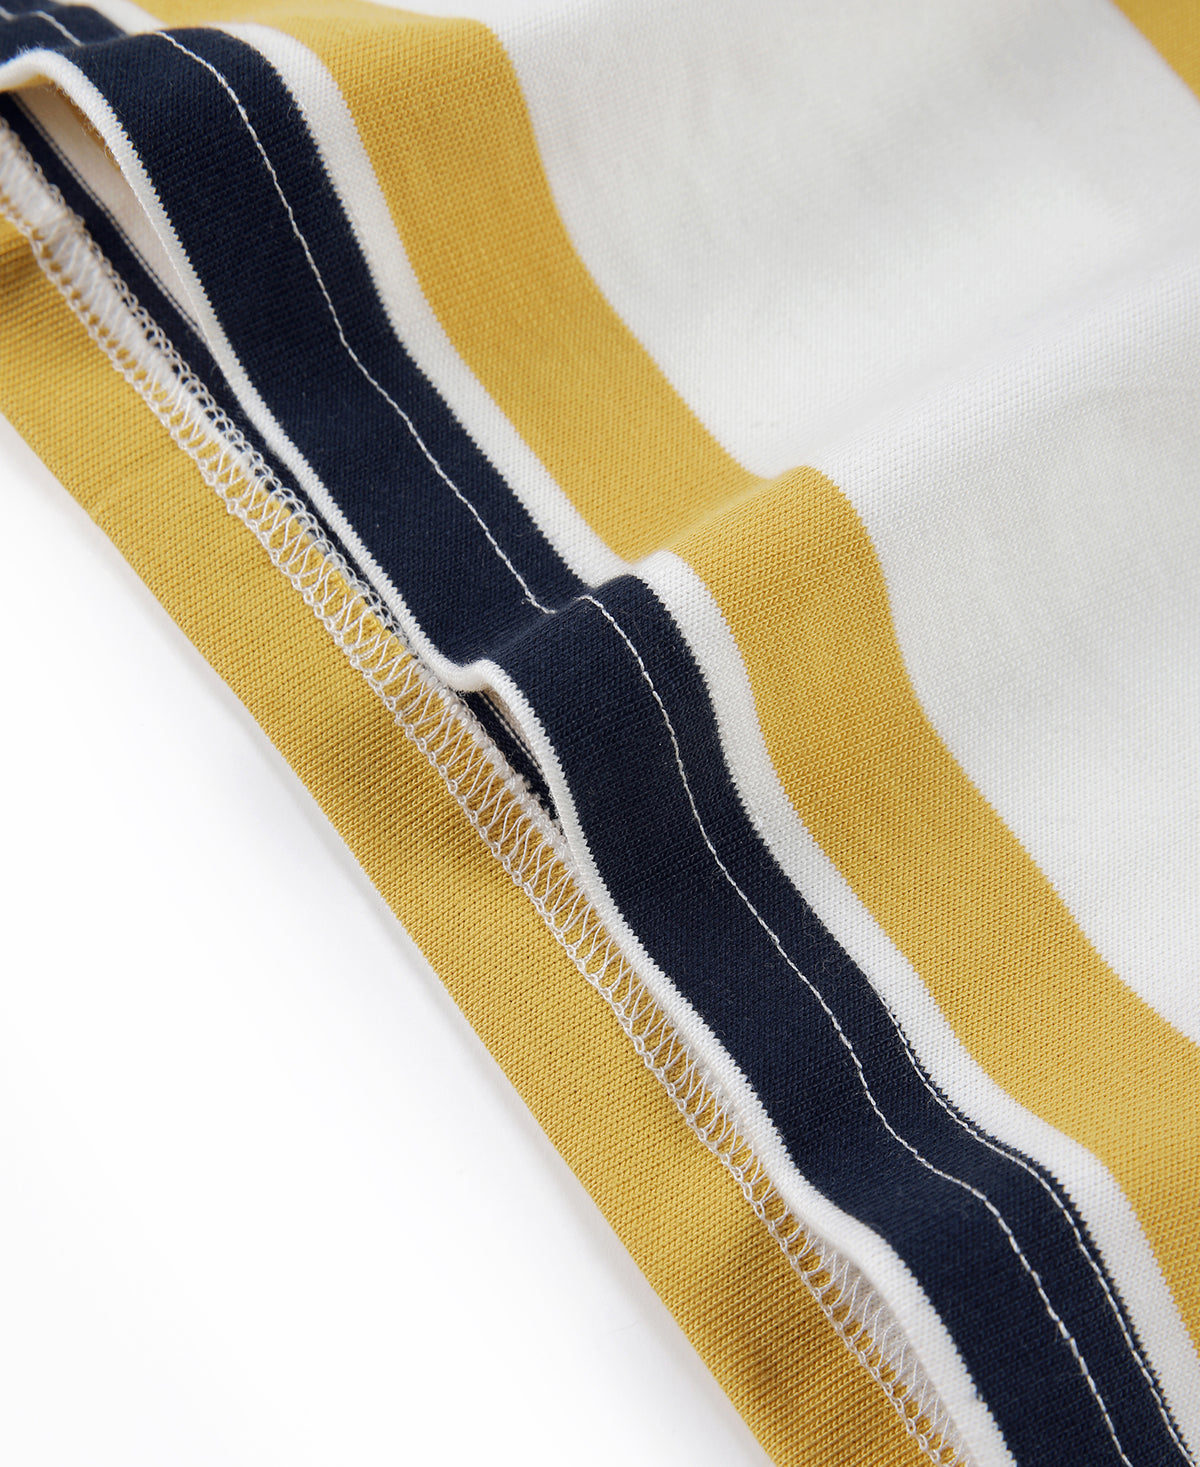 9.8 oz IVY Style Striped T-Shirt - Maize/Blue